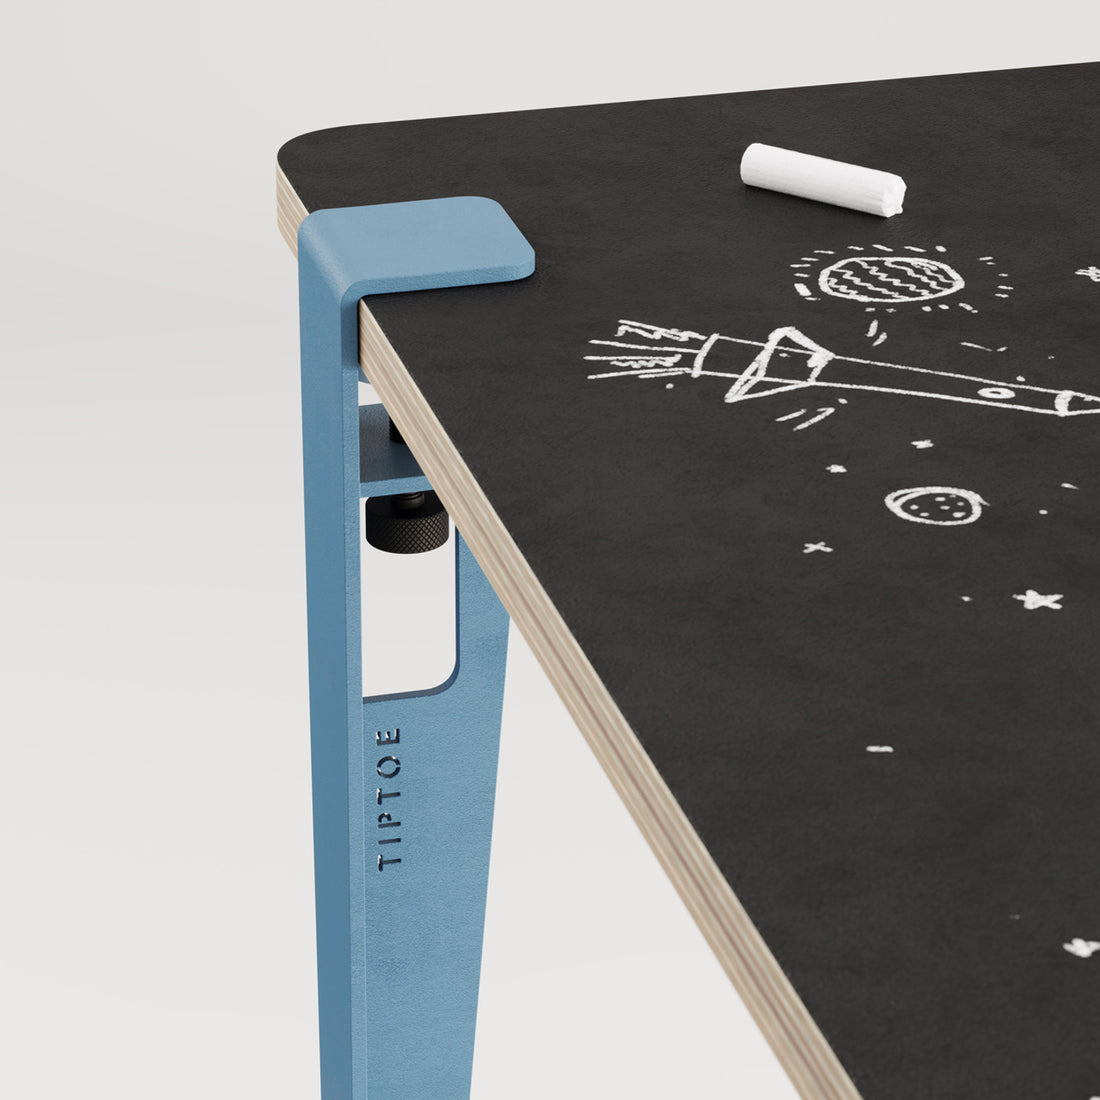 tiptoe-kids-desk-virce-versa-blackboar-&-white-tabletop-with-legs-whale-blue-70x50cm-tipt-stt07005023p02-tle050st1mz450- (8)